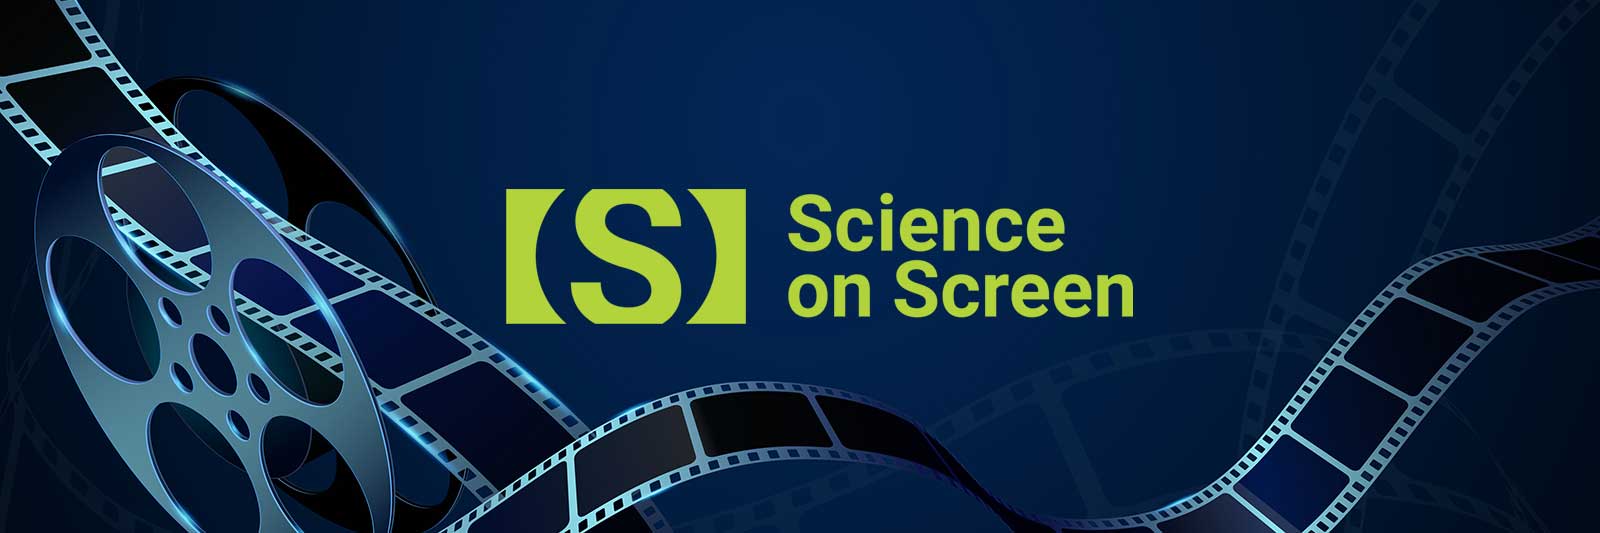 Science on Screen logo